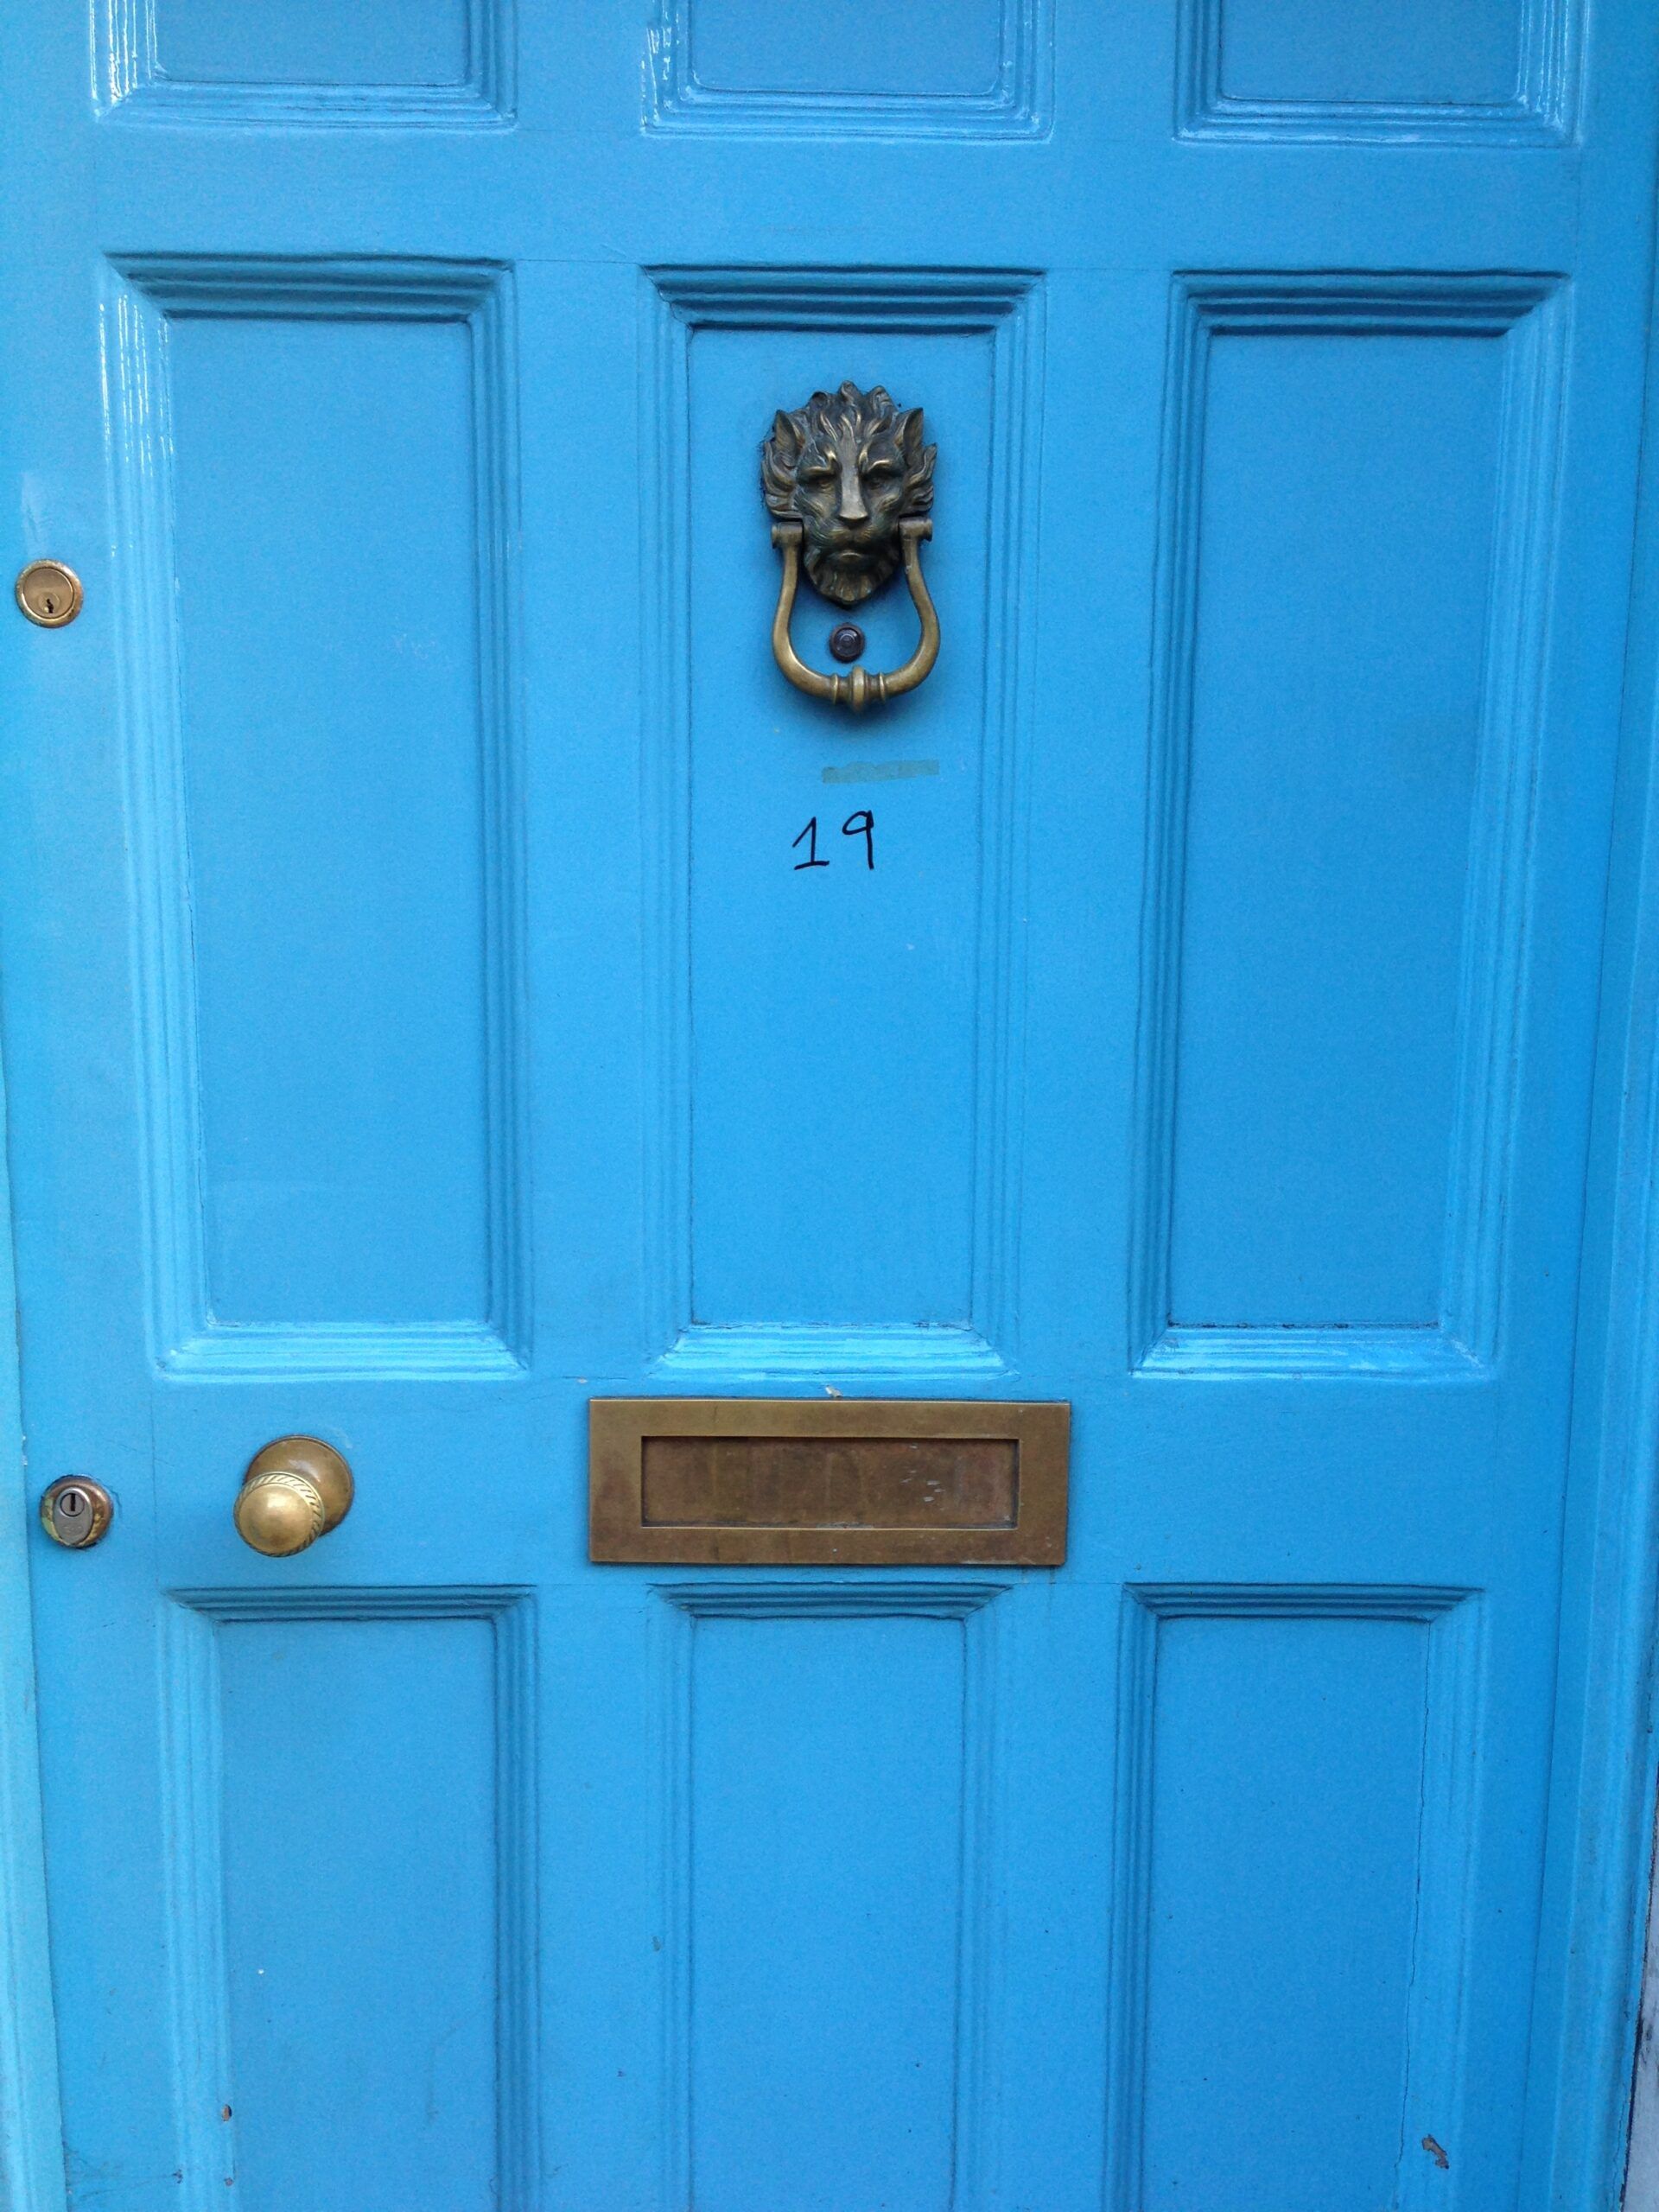 Another Irish wonder. One of Dublin's many beautiful doors.